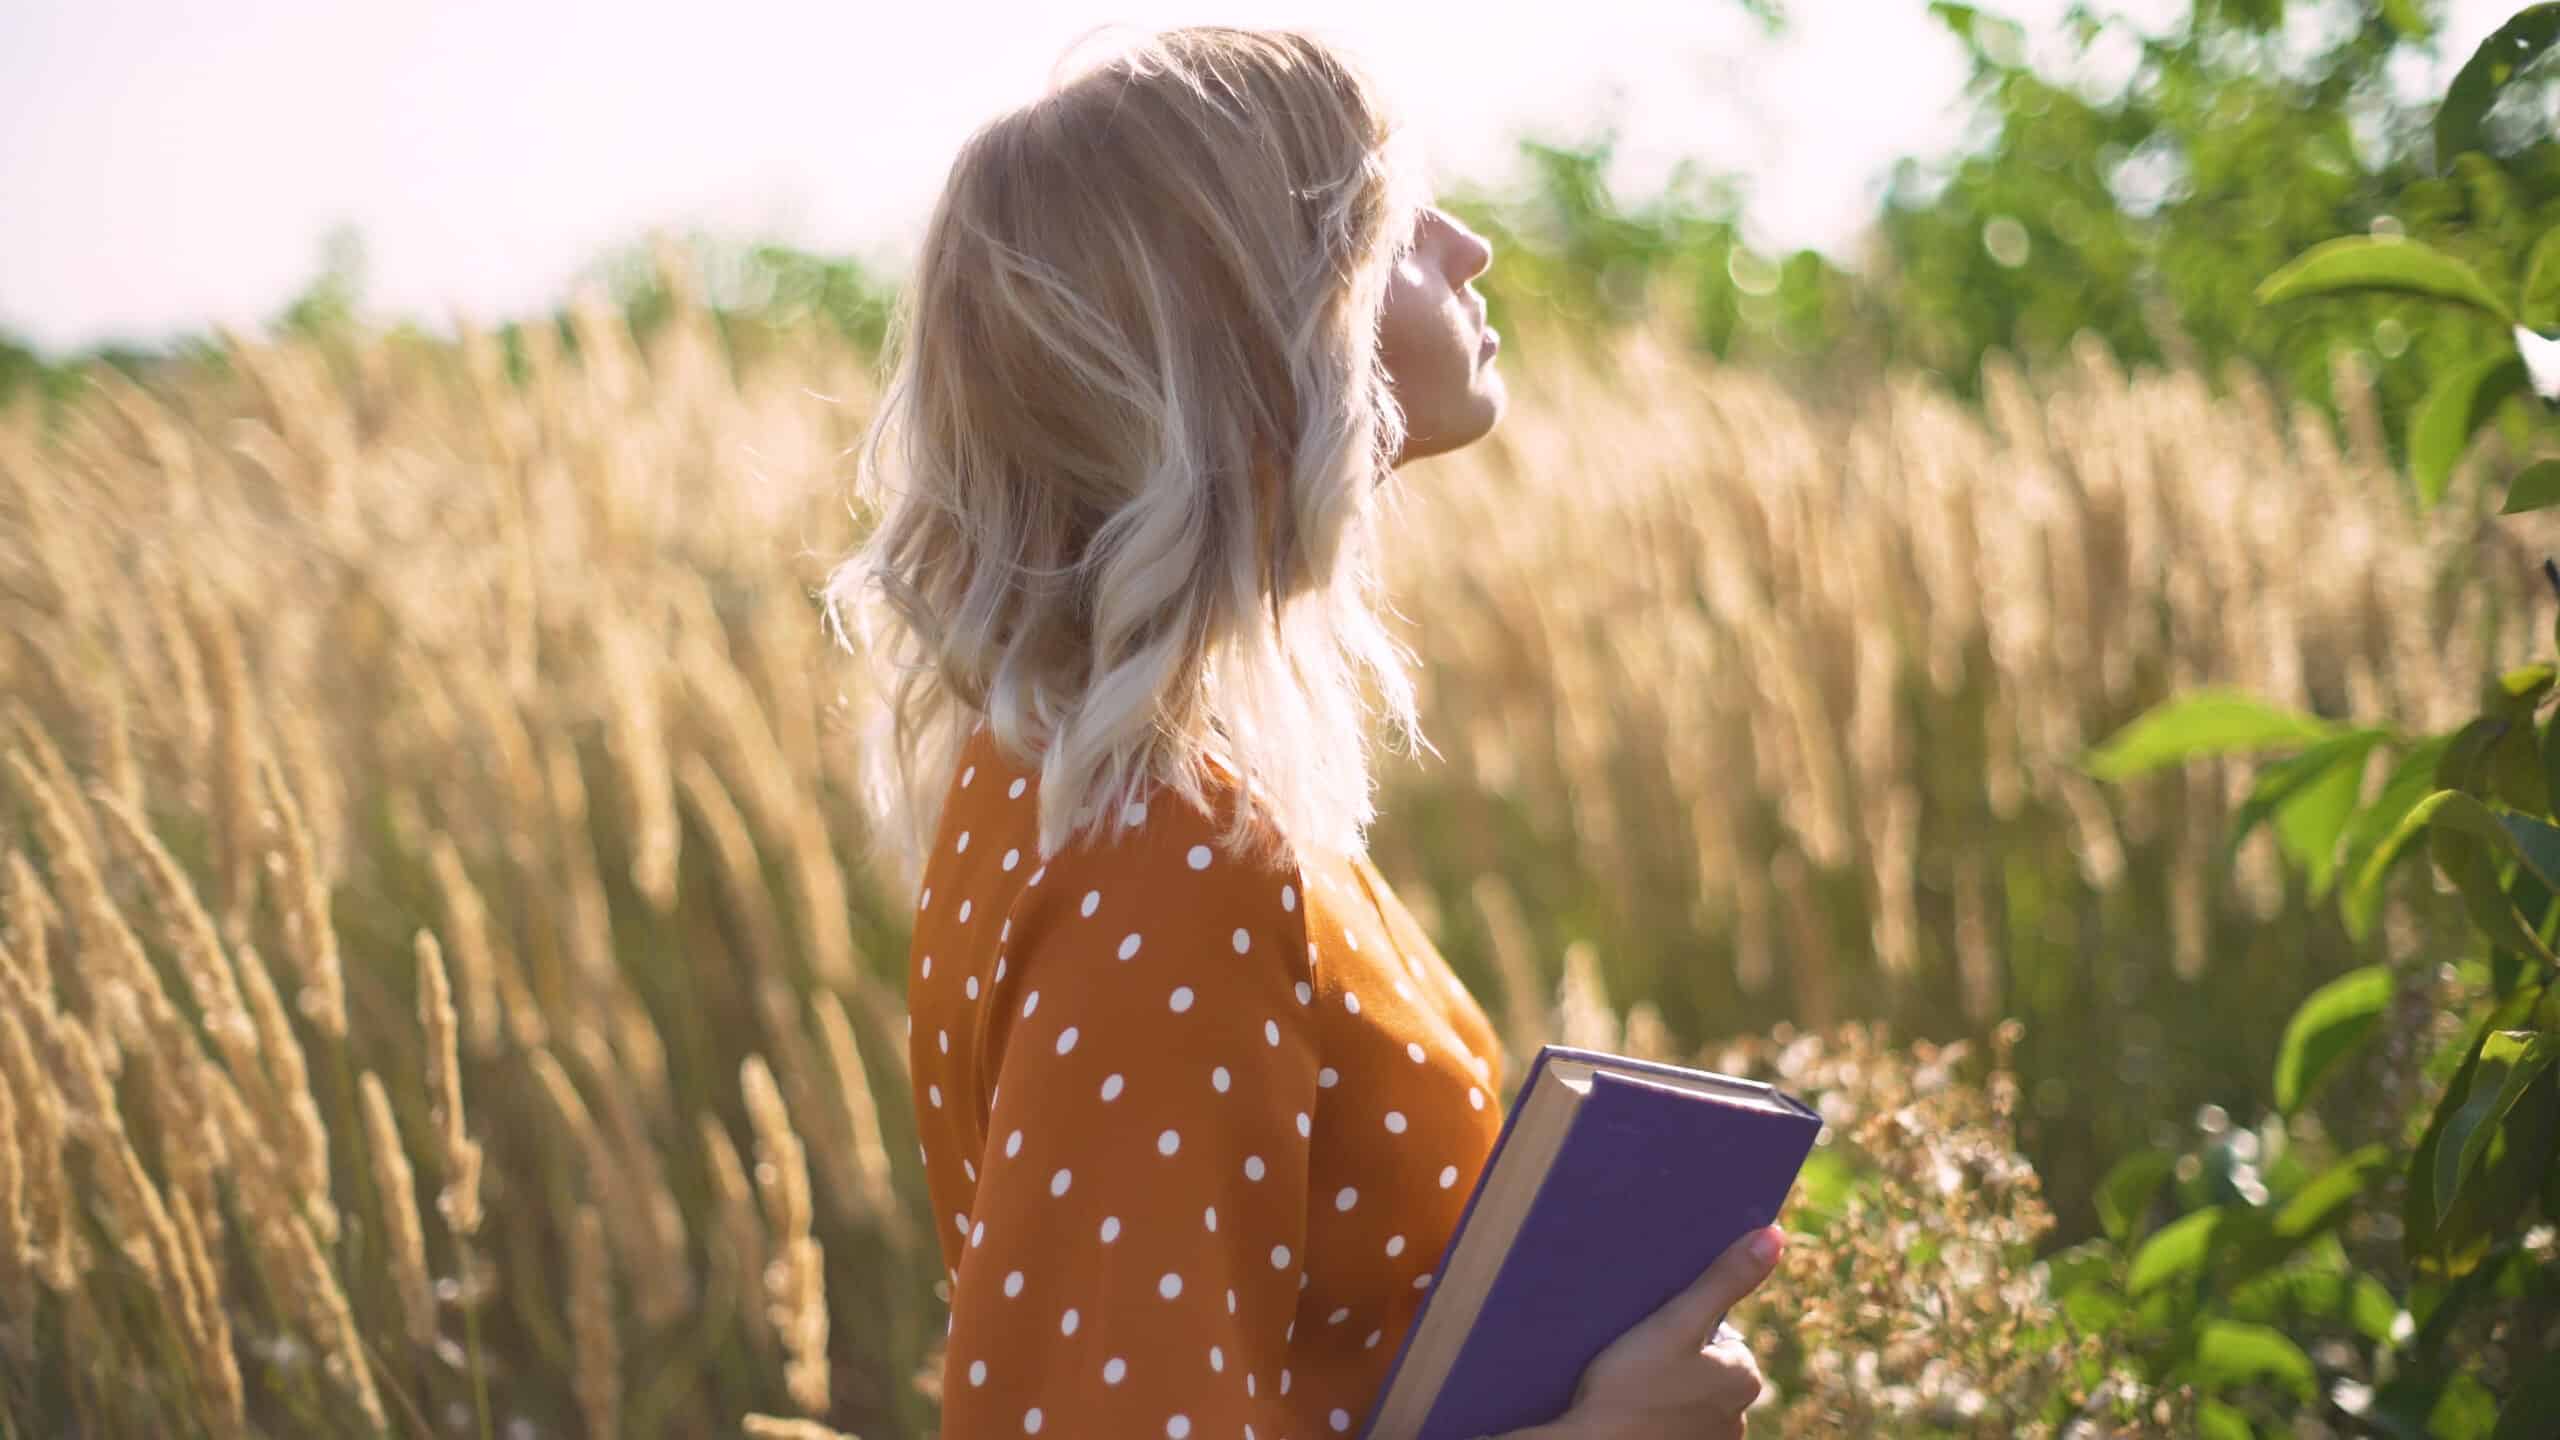 Beautiful happy woman carrying a purple book in a wheat field.